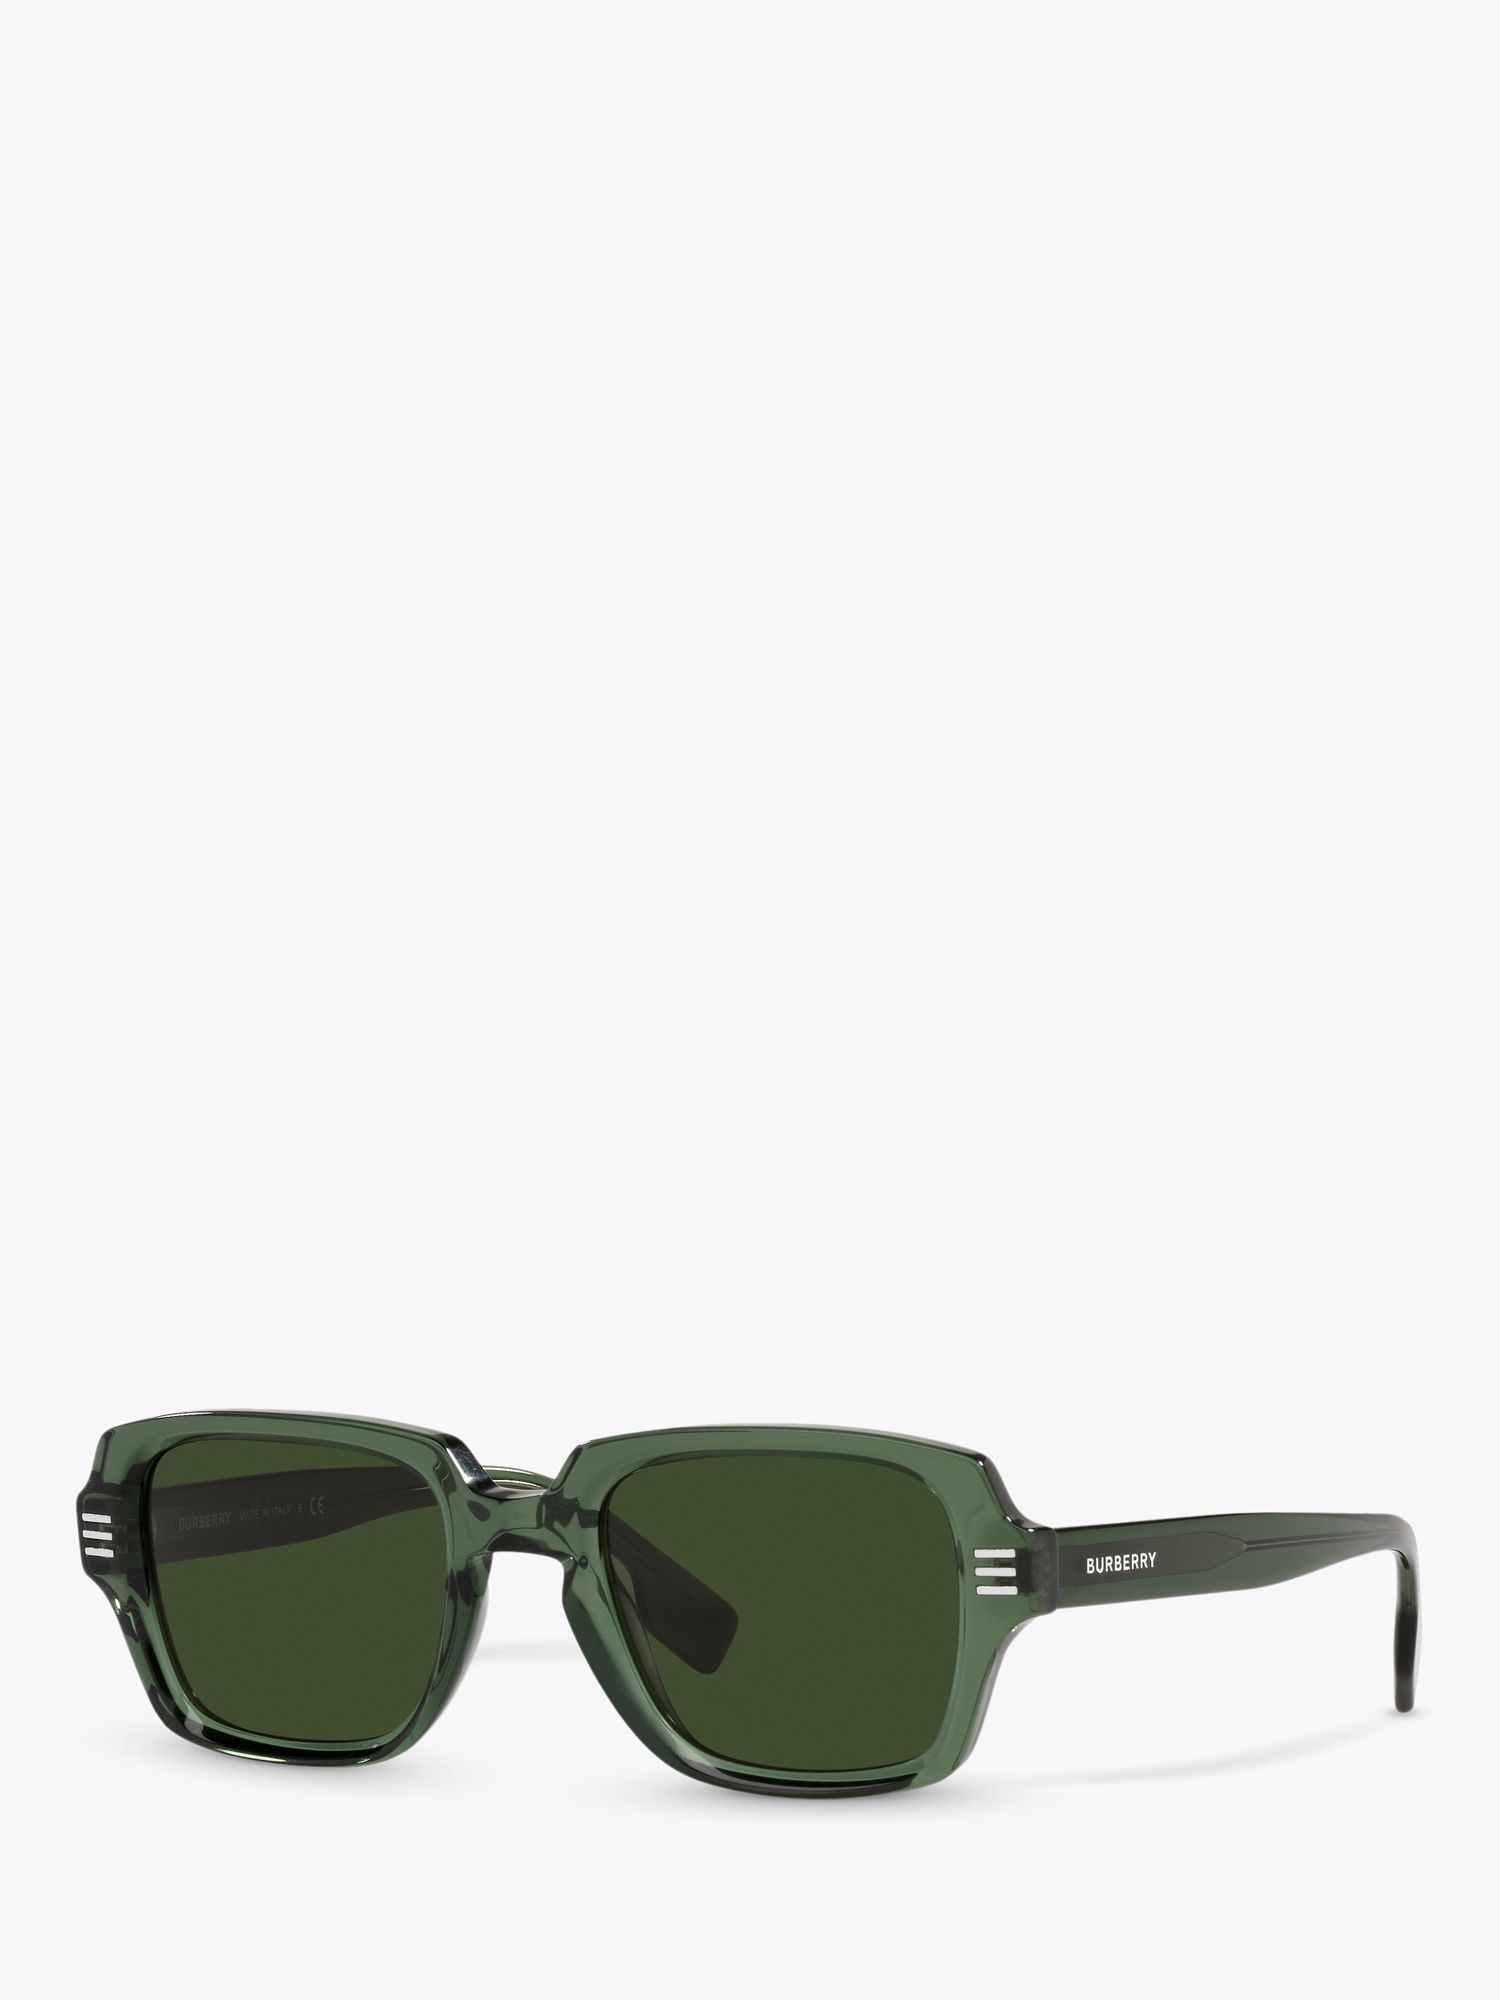 Burberry BE4349 Men's Rectangular Sunglasses, Green at John Lewis & Partners